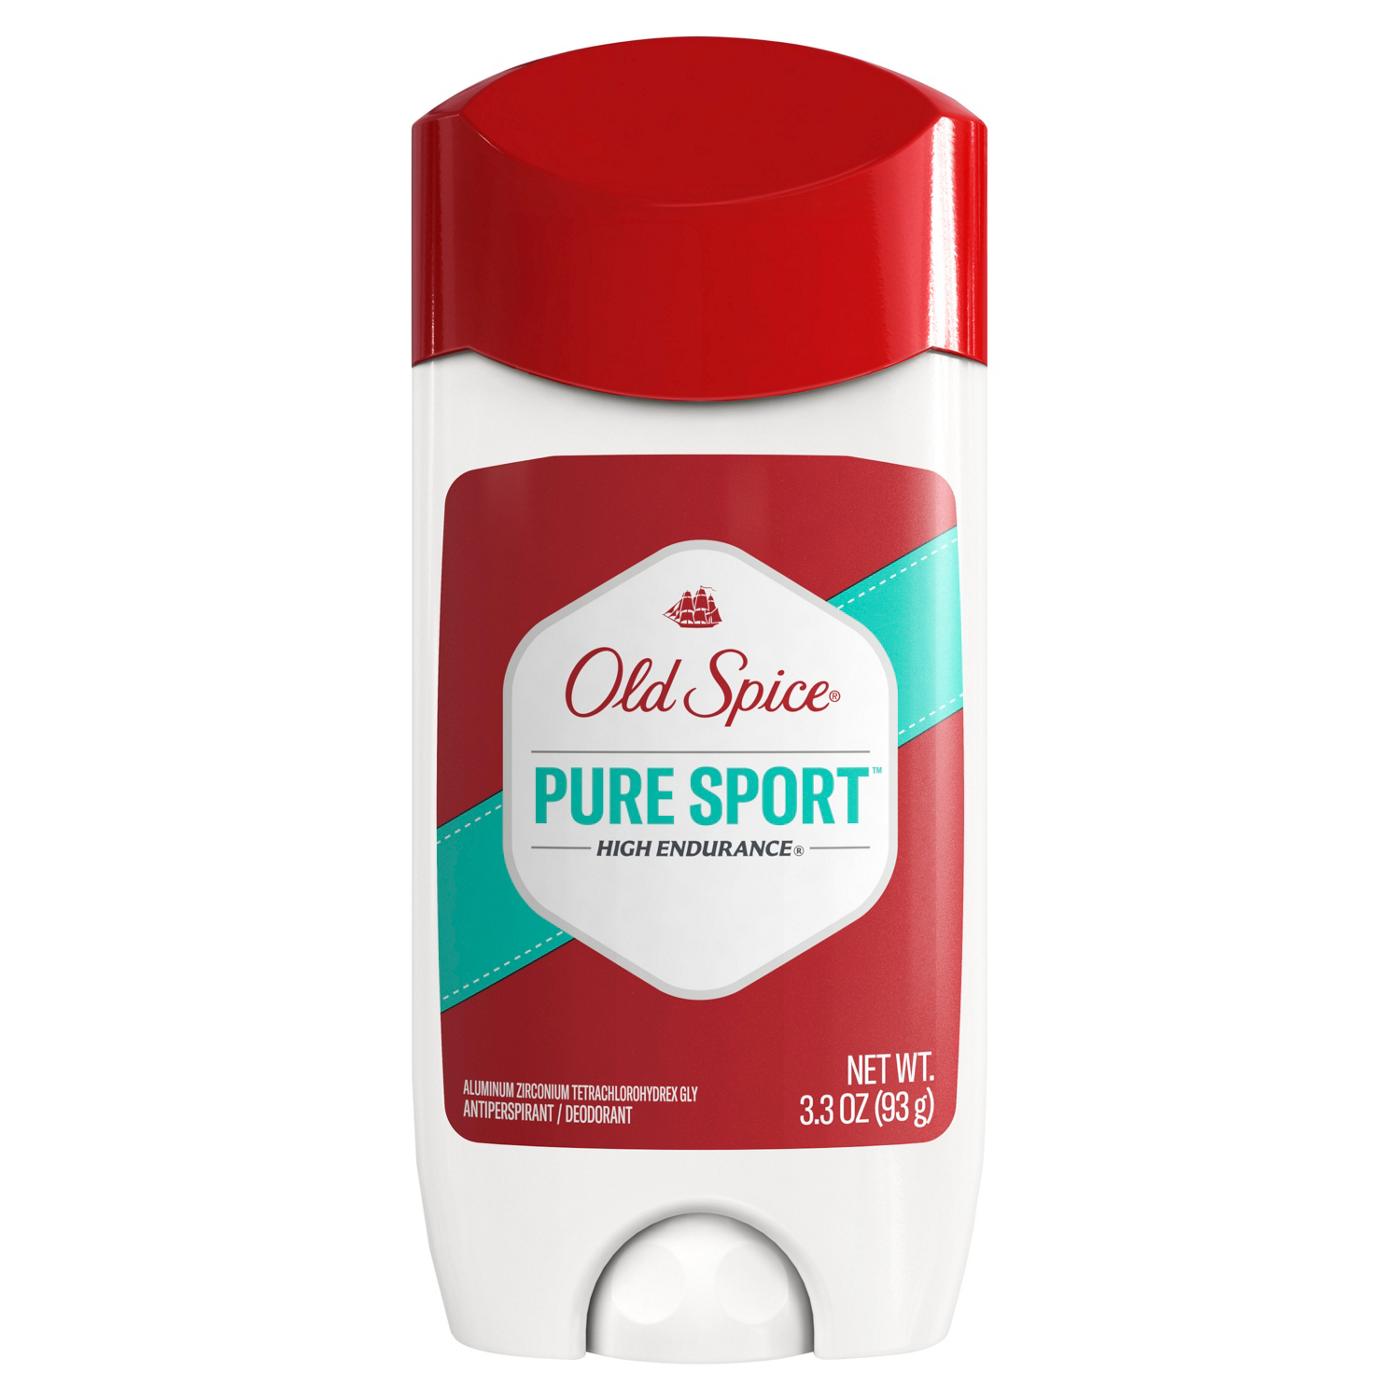 Old Spice Pure Sport Antiperspirant Deodorant; image 1 of 2